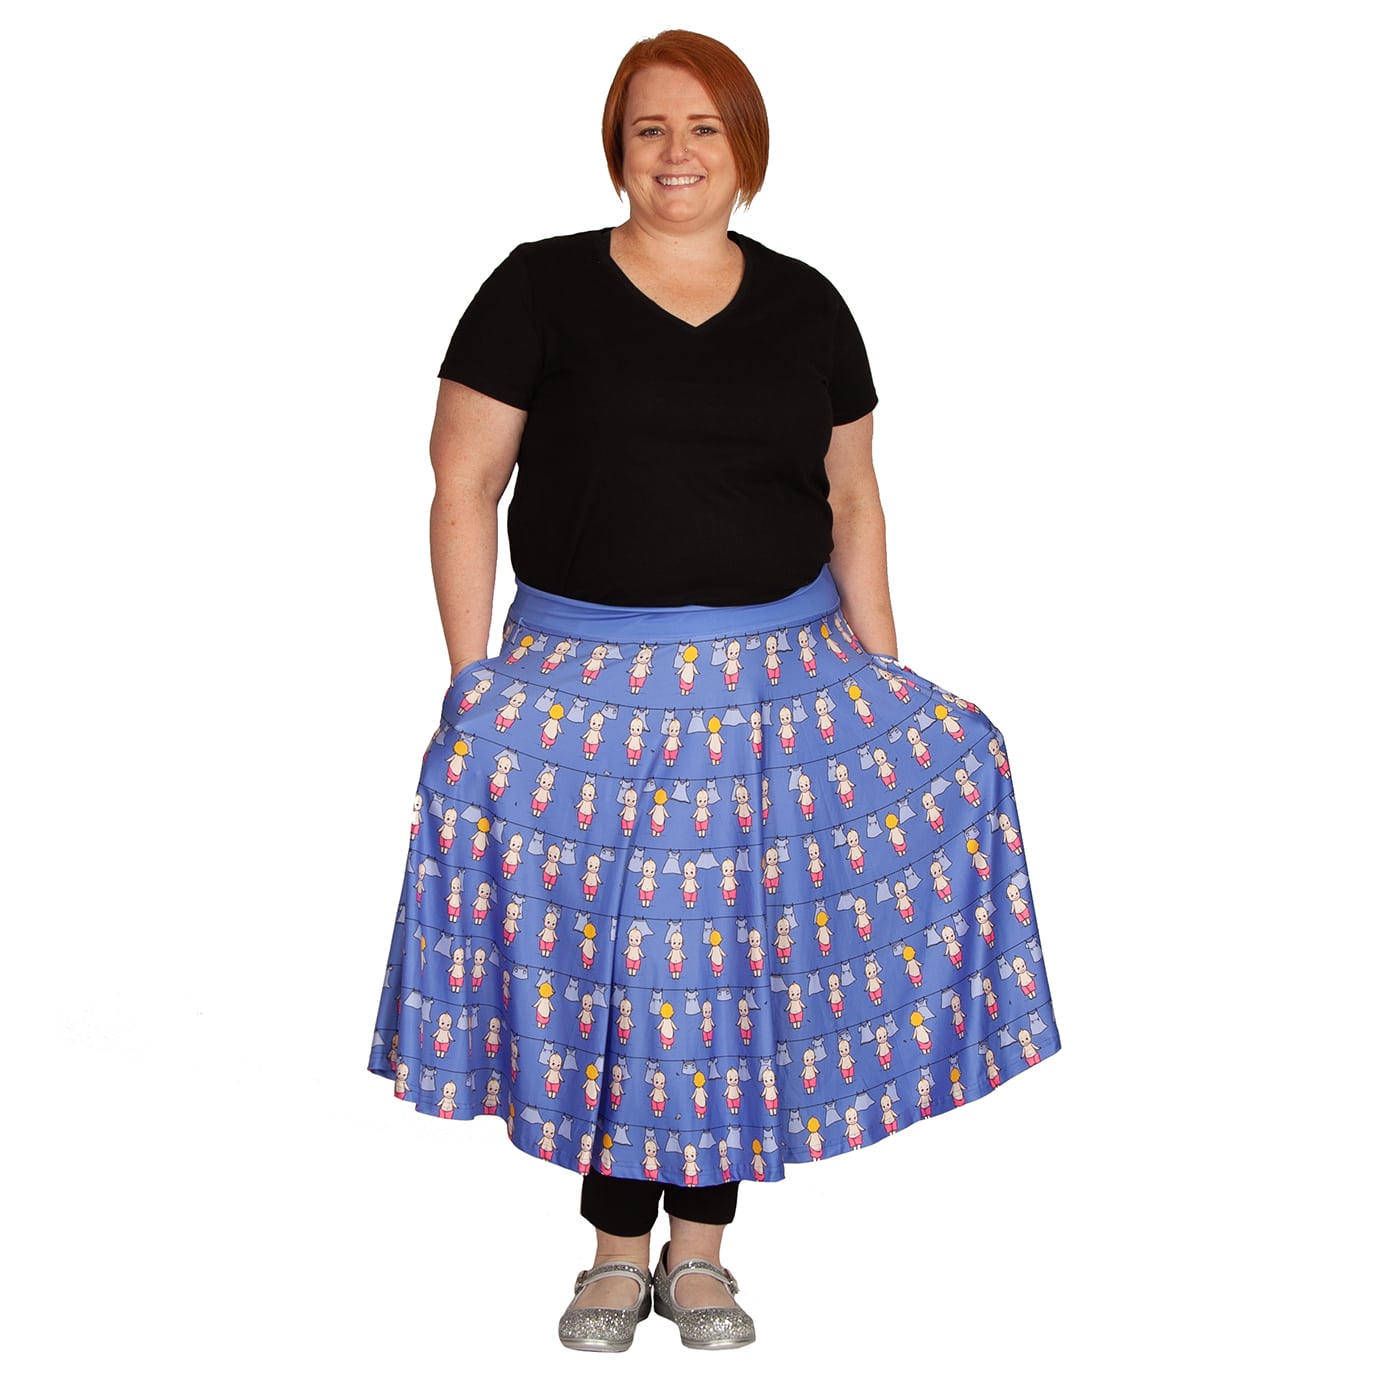 Washing Day Swishy Skirt by RainbowsAndFairies.com.au (Kewpie Doll - Kewpie - Vintage Doll - Kitsch - Circle Skirt With Pockets - Mod Retro) - SKU: CL_SWISH_WASHD_ORG - Pic-07